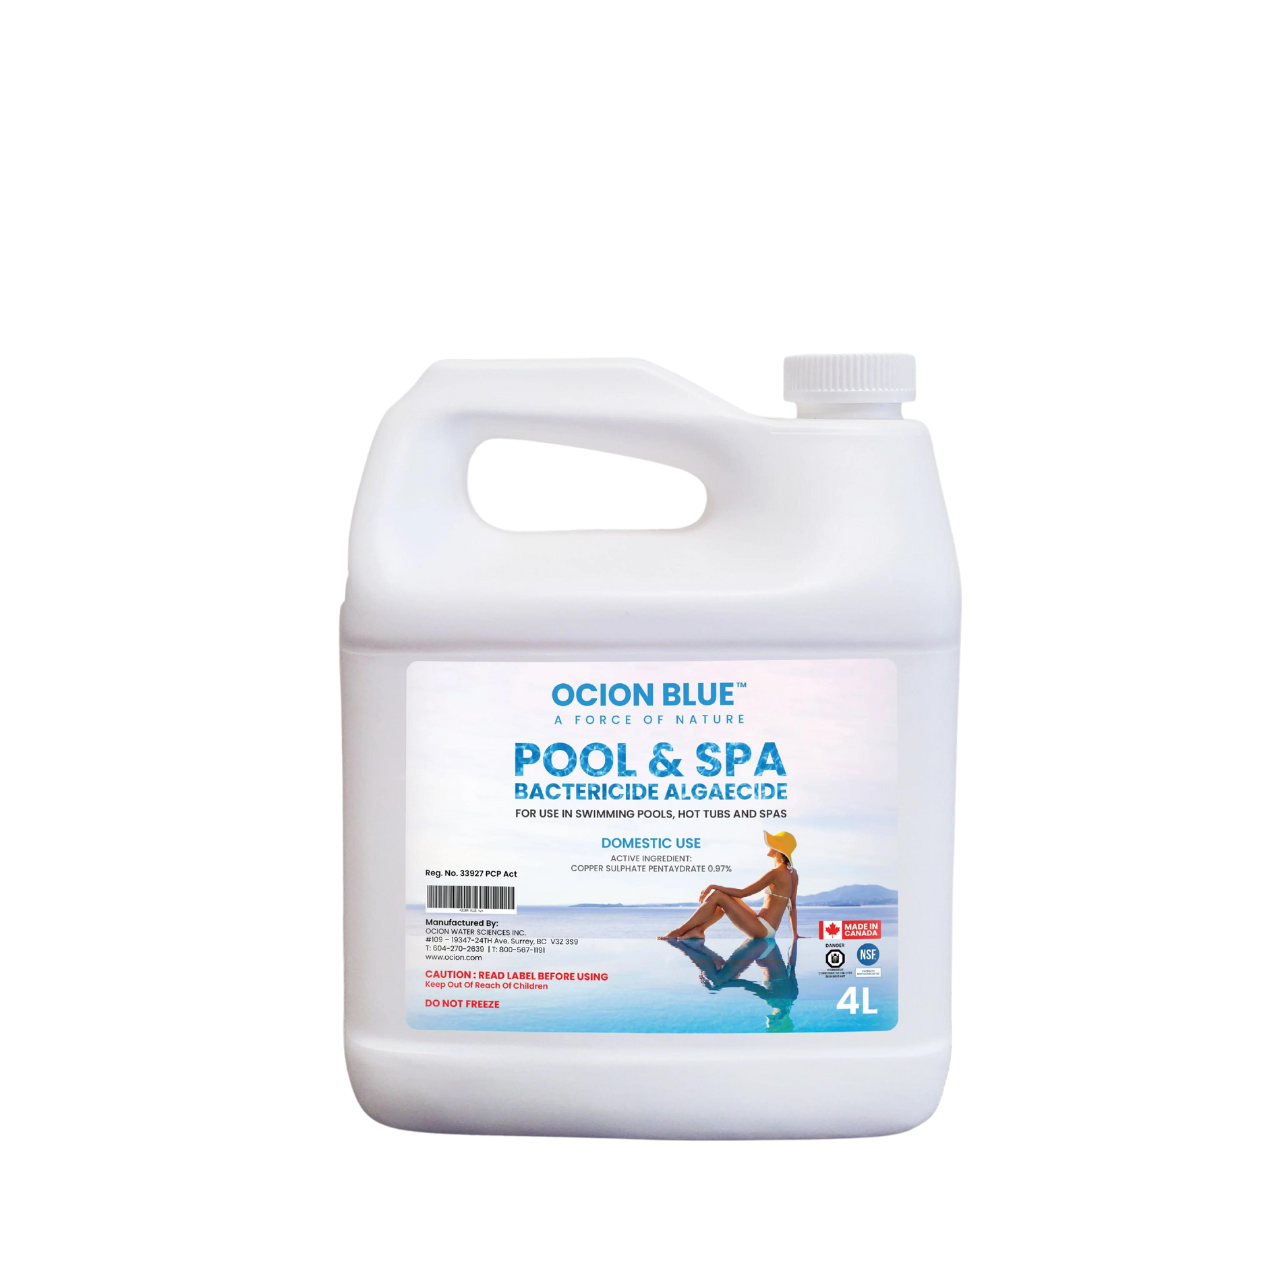 Ocion Blue - Pool & Spa Bacterial Algaecide